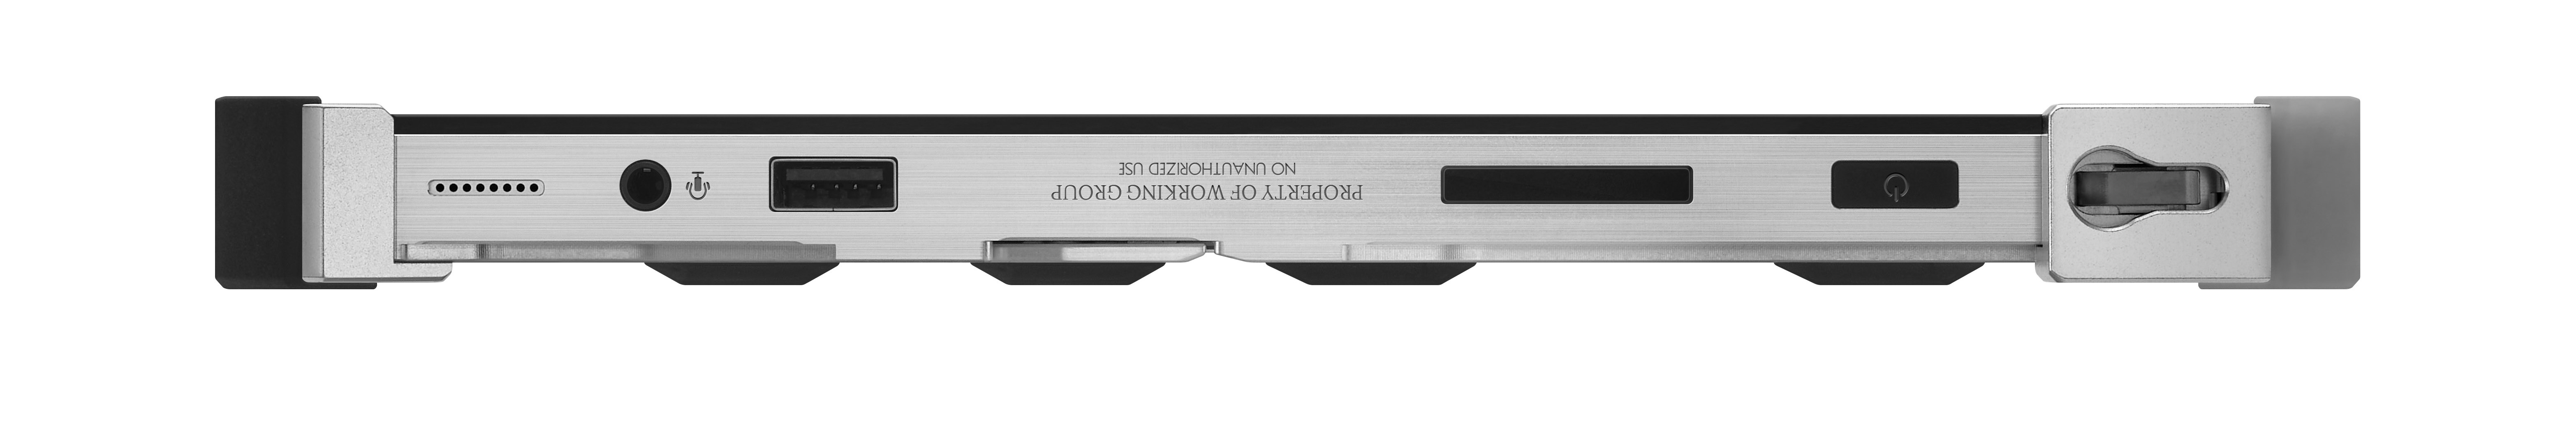 Asus - Portátil ASUS ROG Flow Z13-ACRNM RMT02 GZ301 13.4" i9 13900H 32GB DDR5 1TB RTX 4070 QHD+ 165Hz